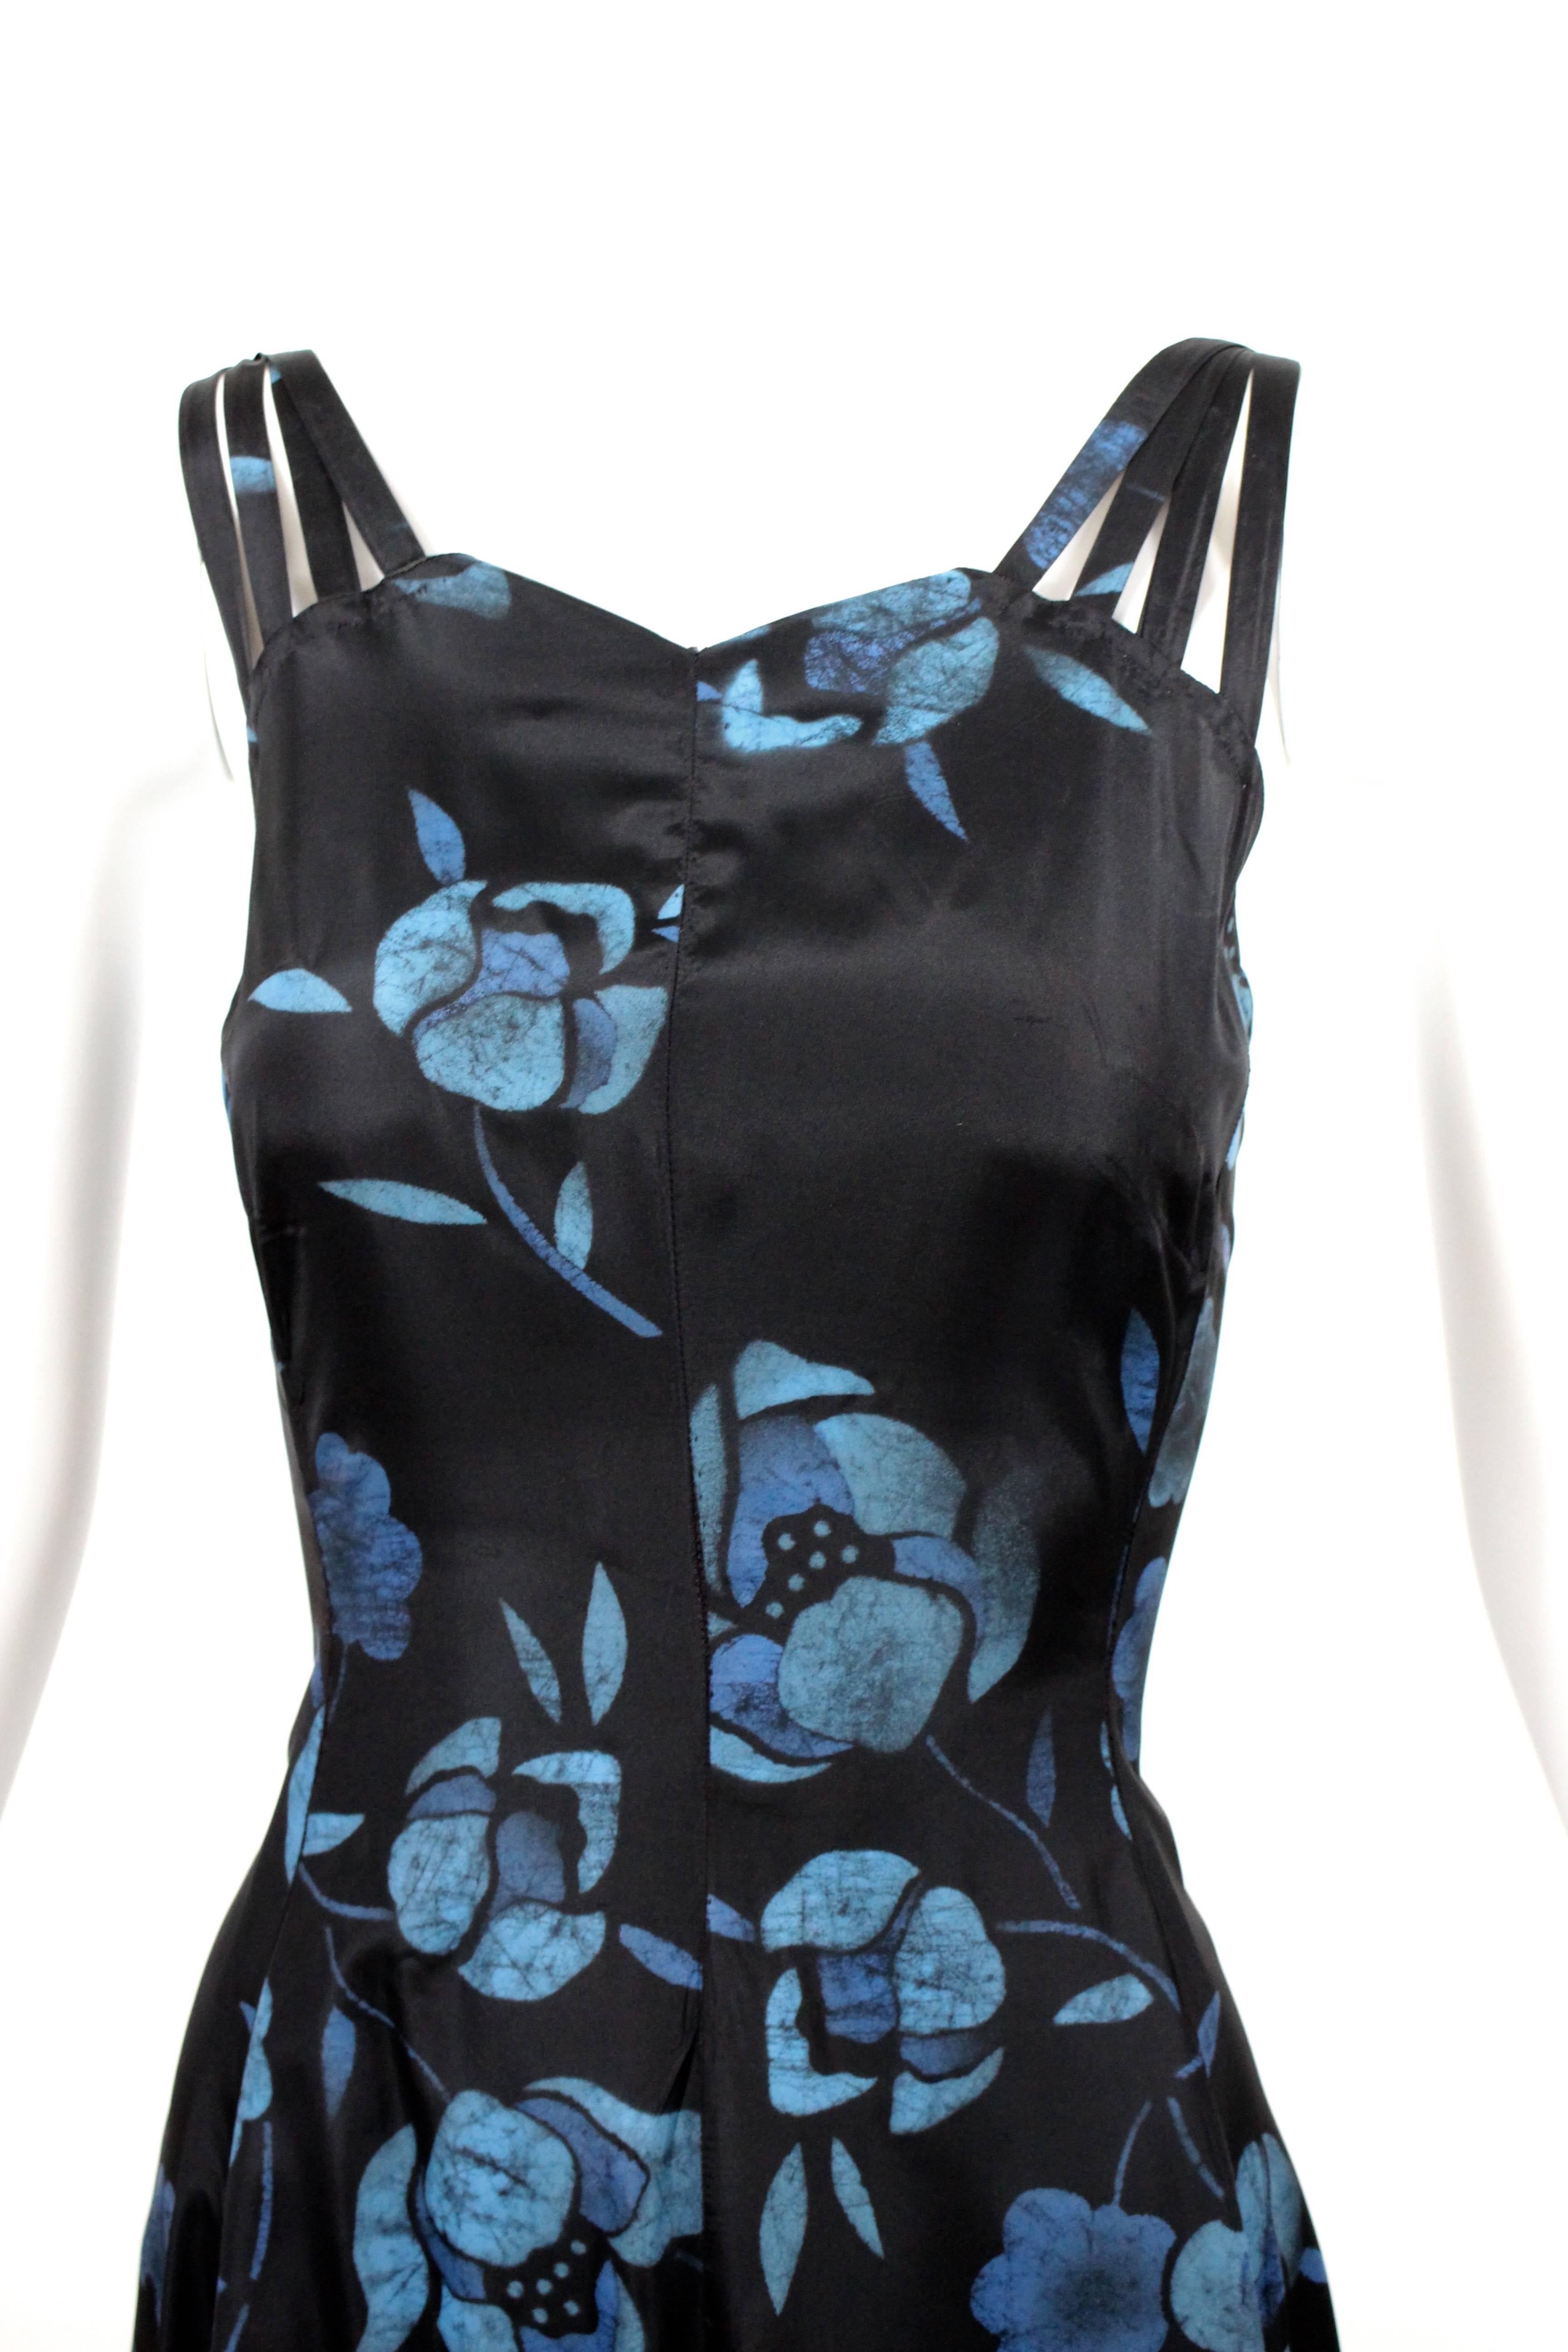 1930s Black and Blue Batik Floral Print Strappy Sleeveless Maxi Dress ...